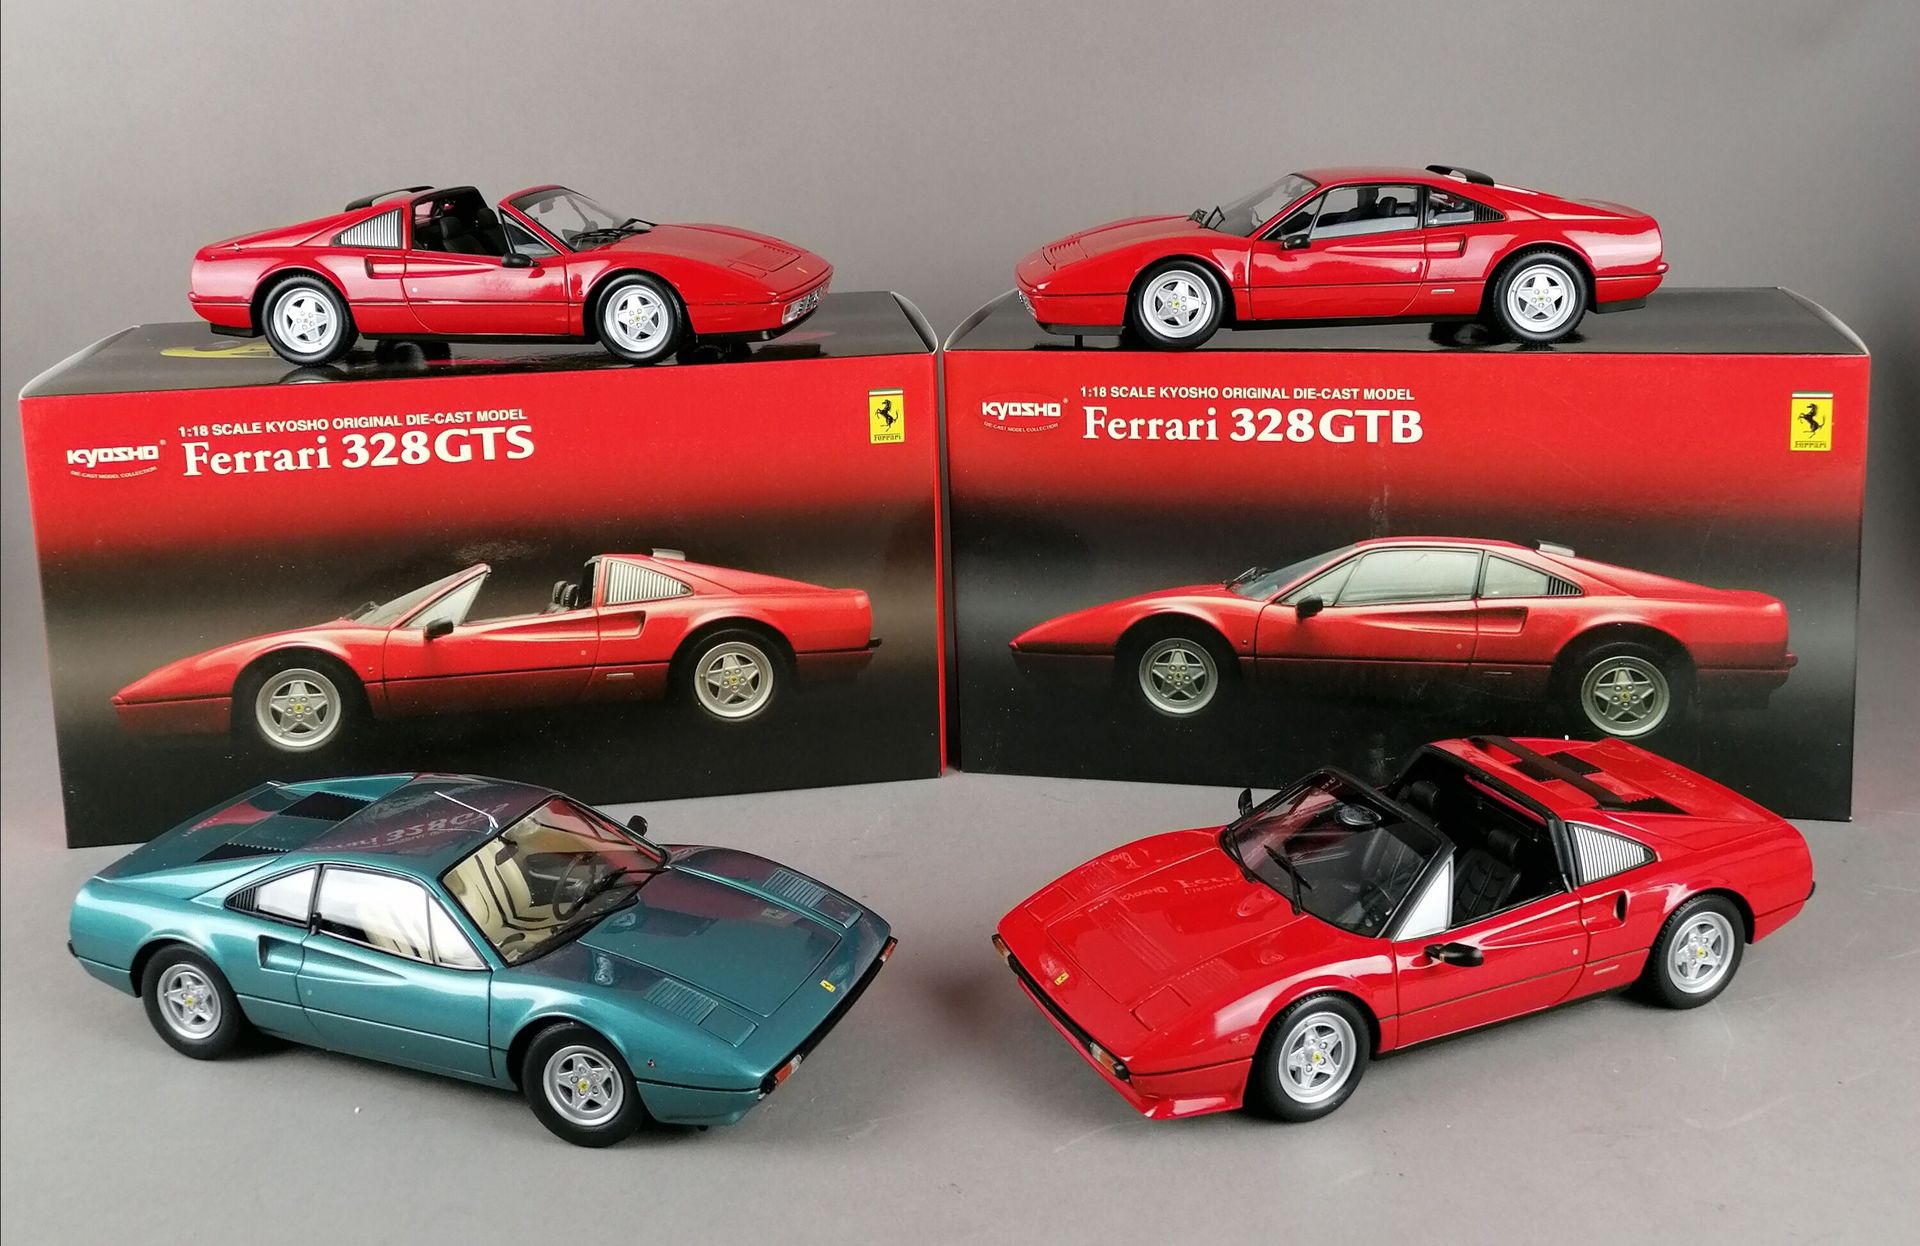 Null KYOSHO - QUATRE Ferrari échelle 1/18 :

1x 328 GTS

1x 328 GTB

1x 308 GTS &hellip;